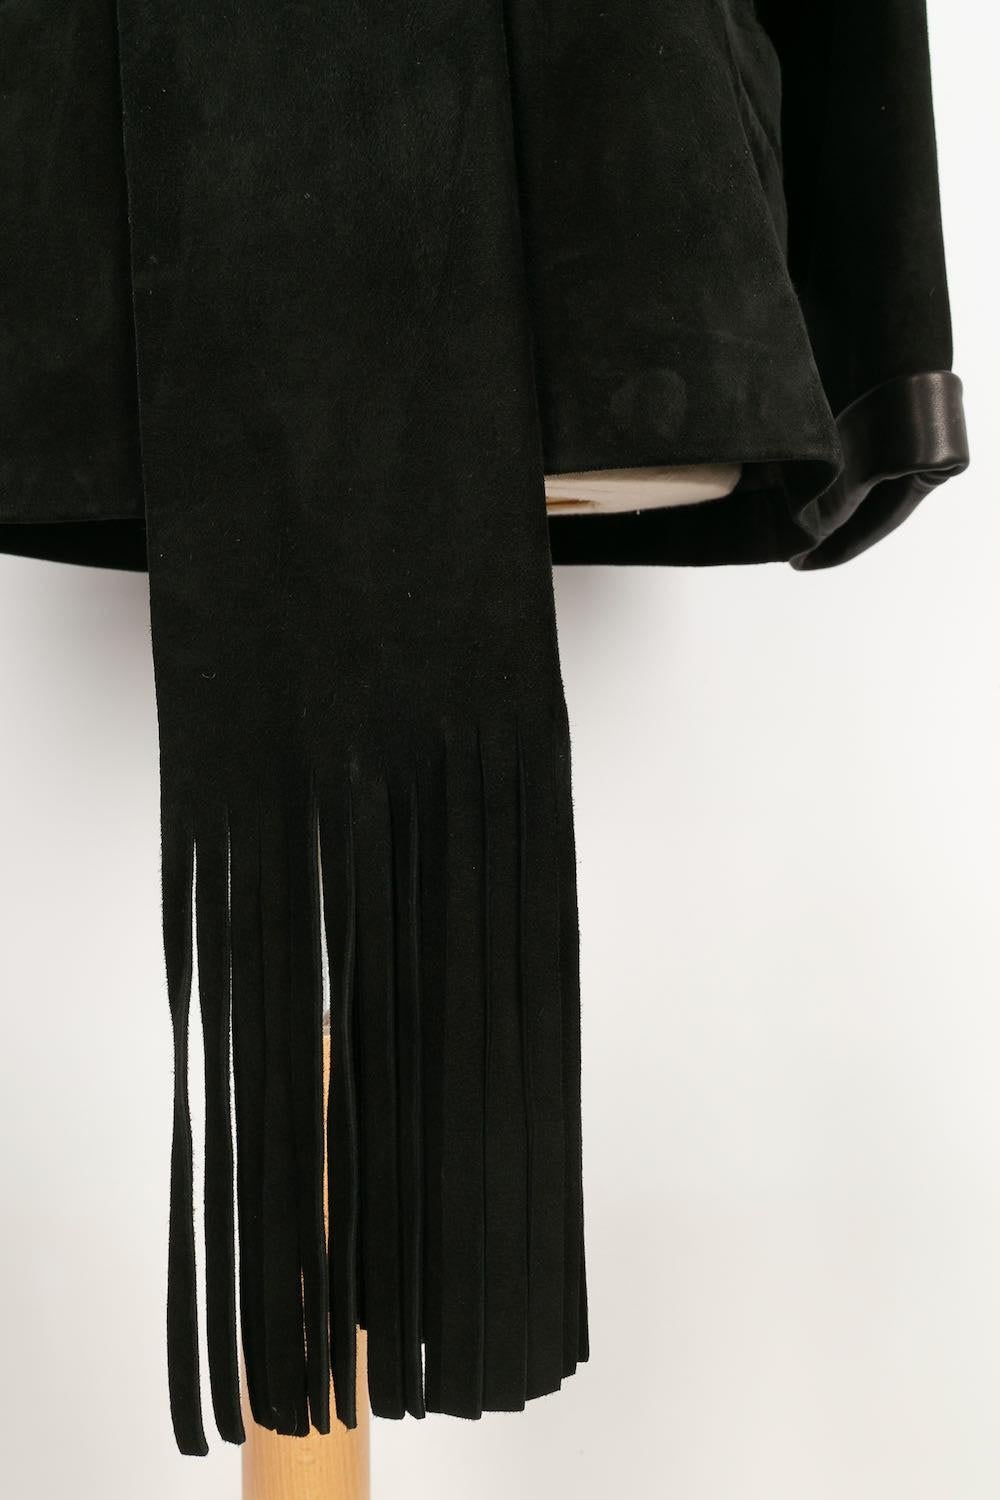 Christian Dior Black Lamb Leather Jacket For Sale 1